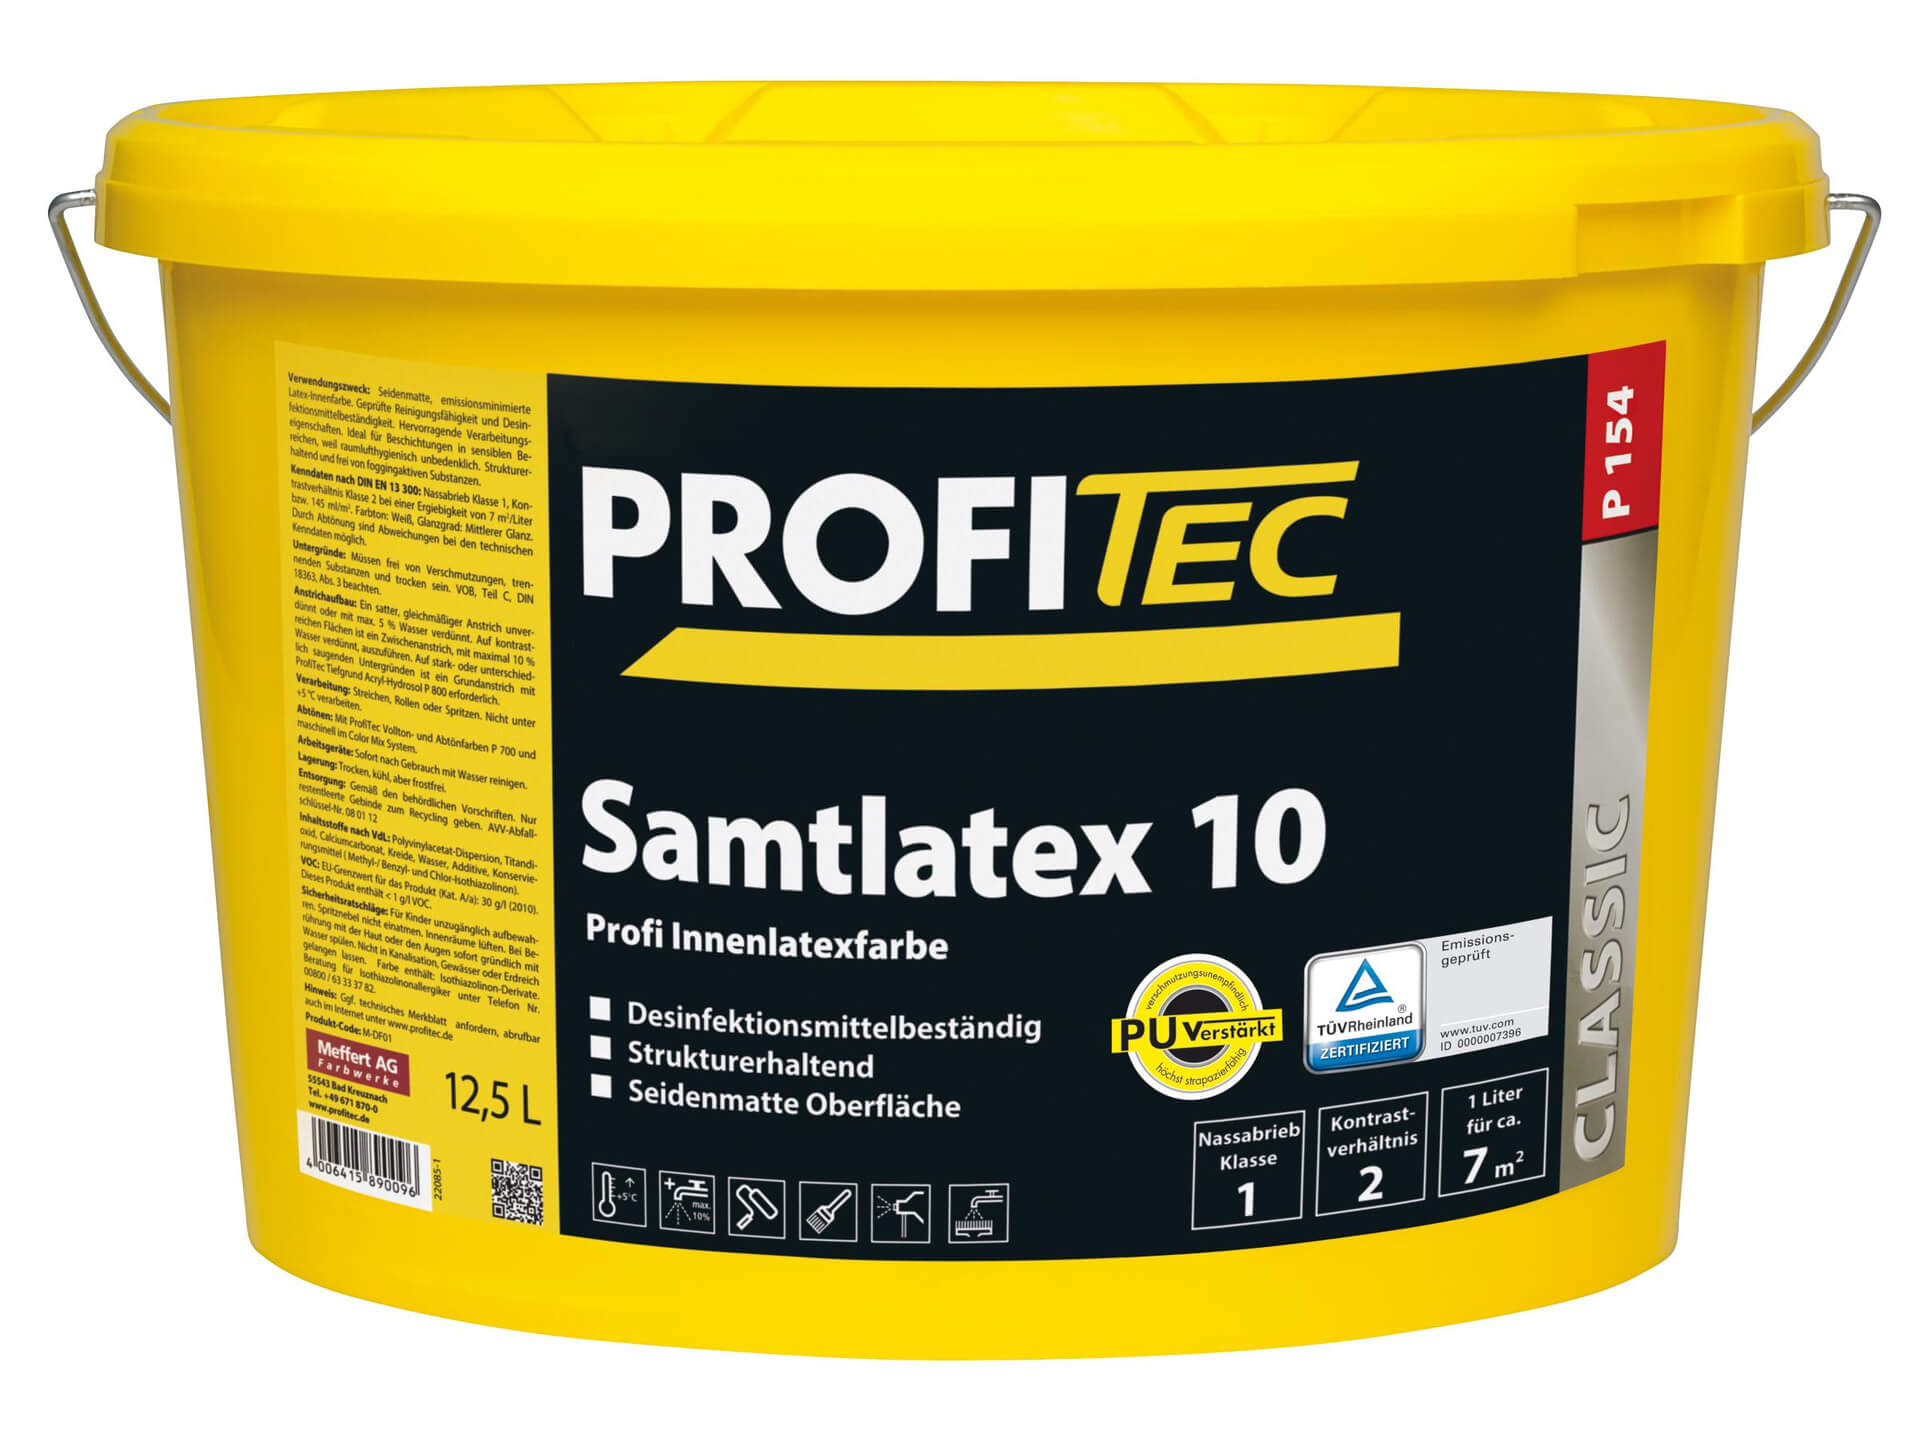 Samtlatex 10 P 154